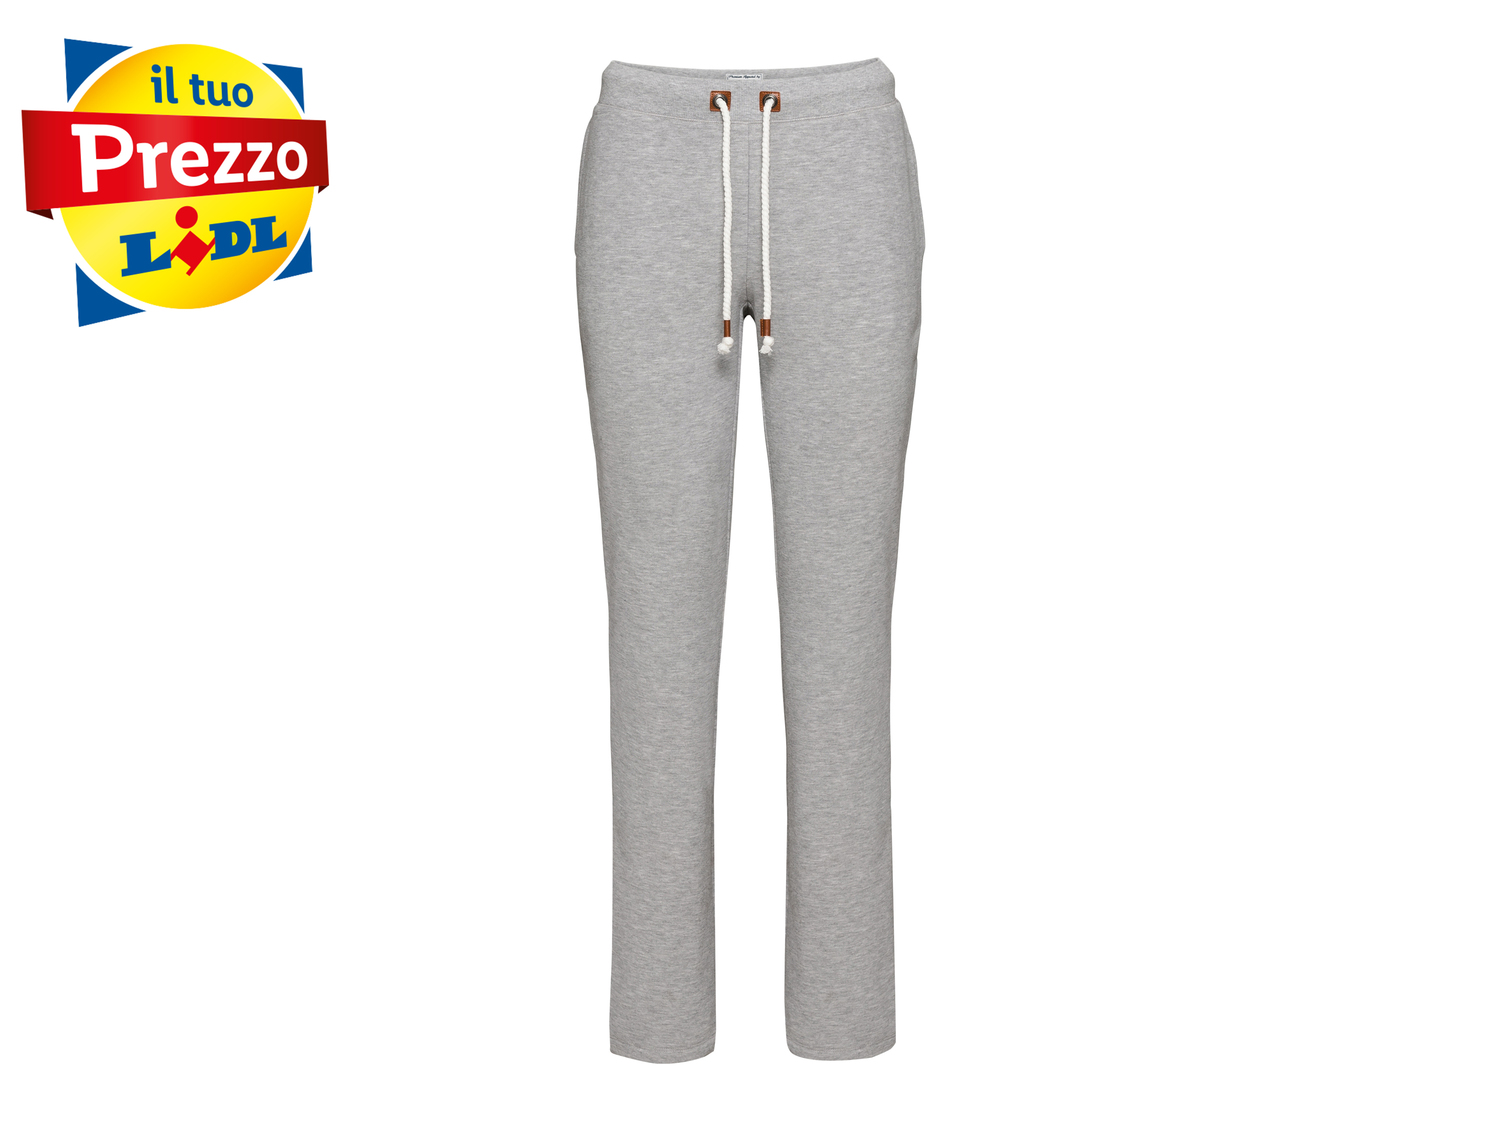 Pantaloni sportivi da donna Esmara, prezzo 11.99 &#8364;  
Misure: XS-L
- Oeko tex NEW